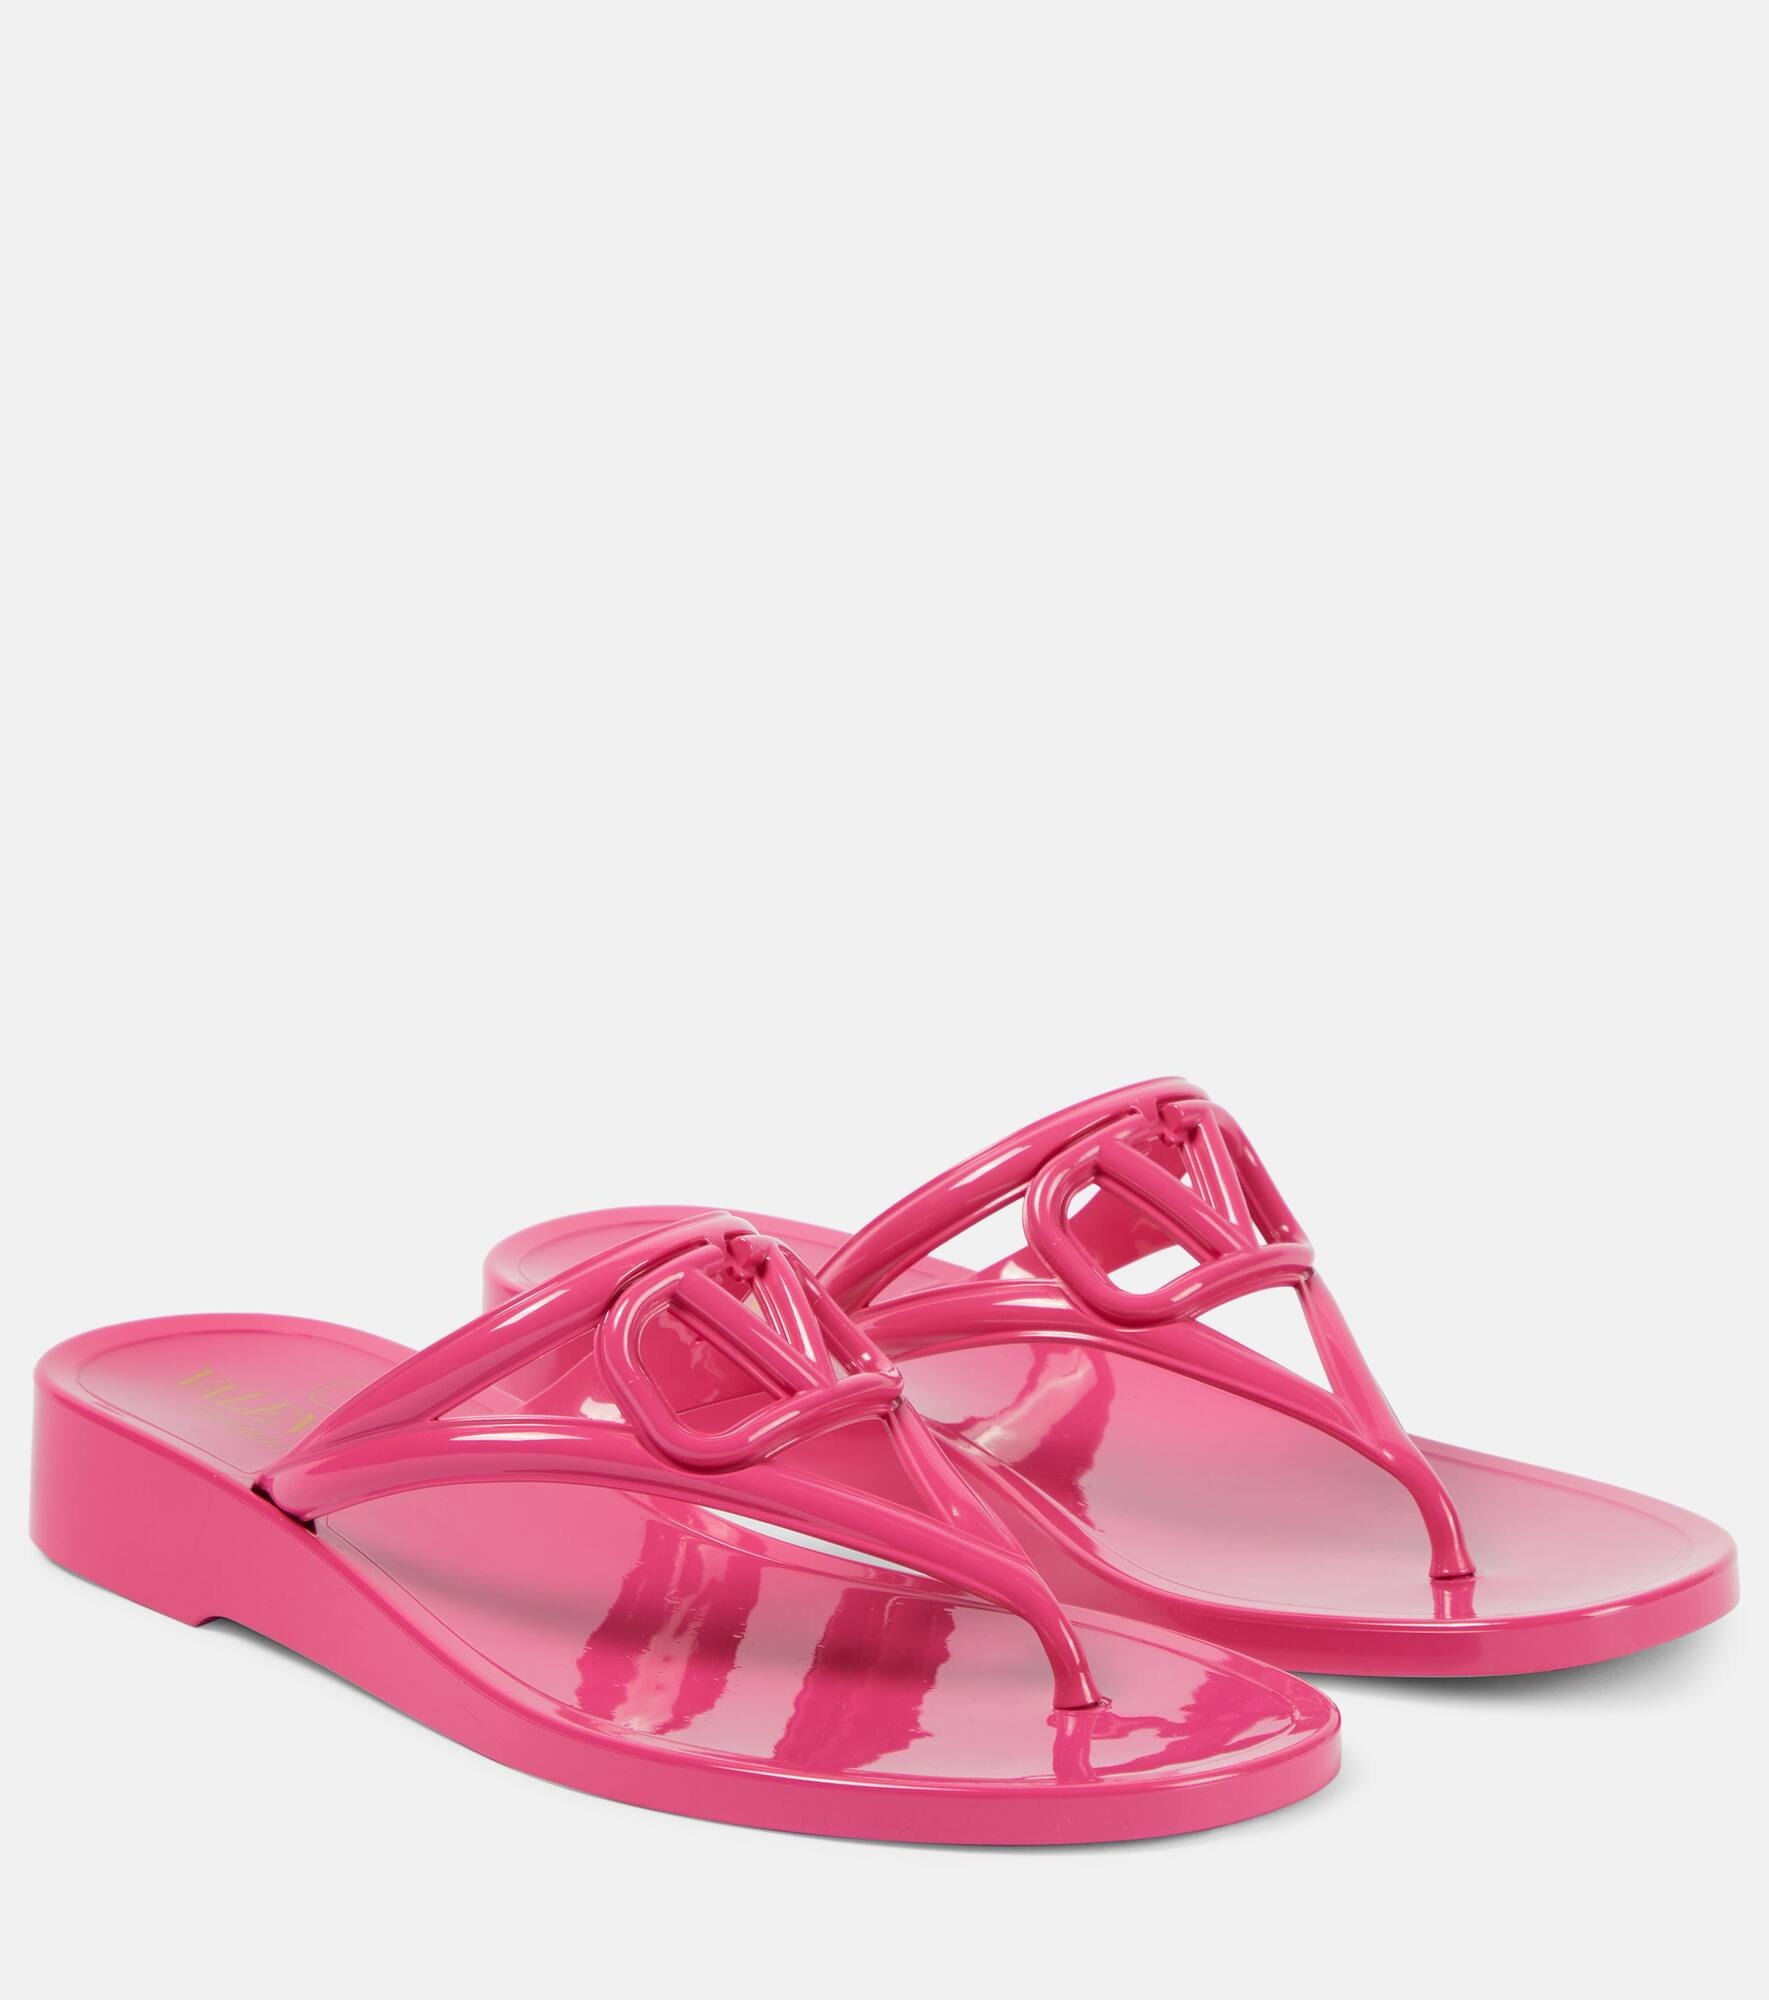 VLogo Signature rubber thong sandals - 1